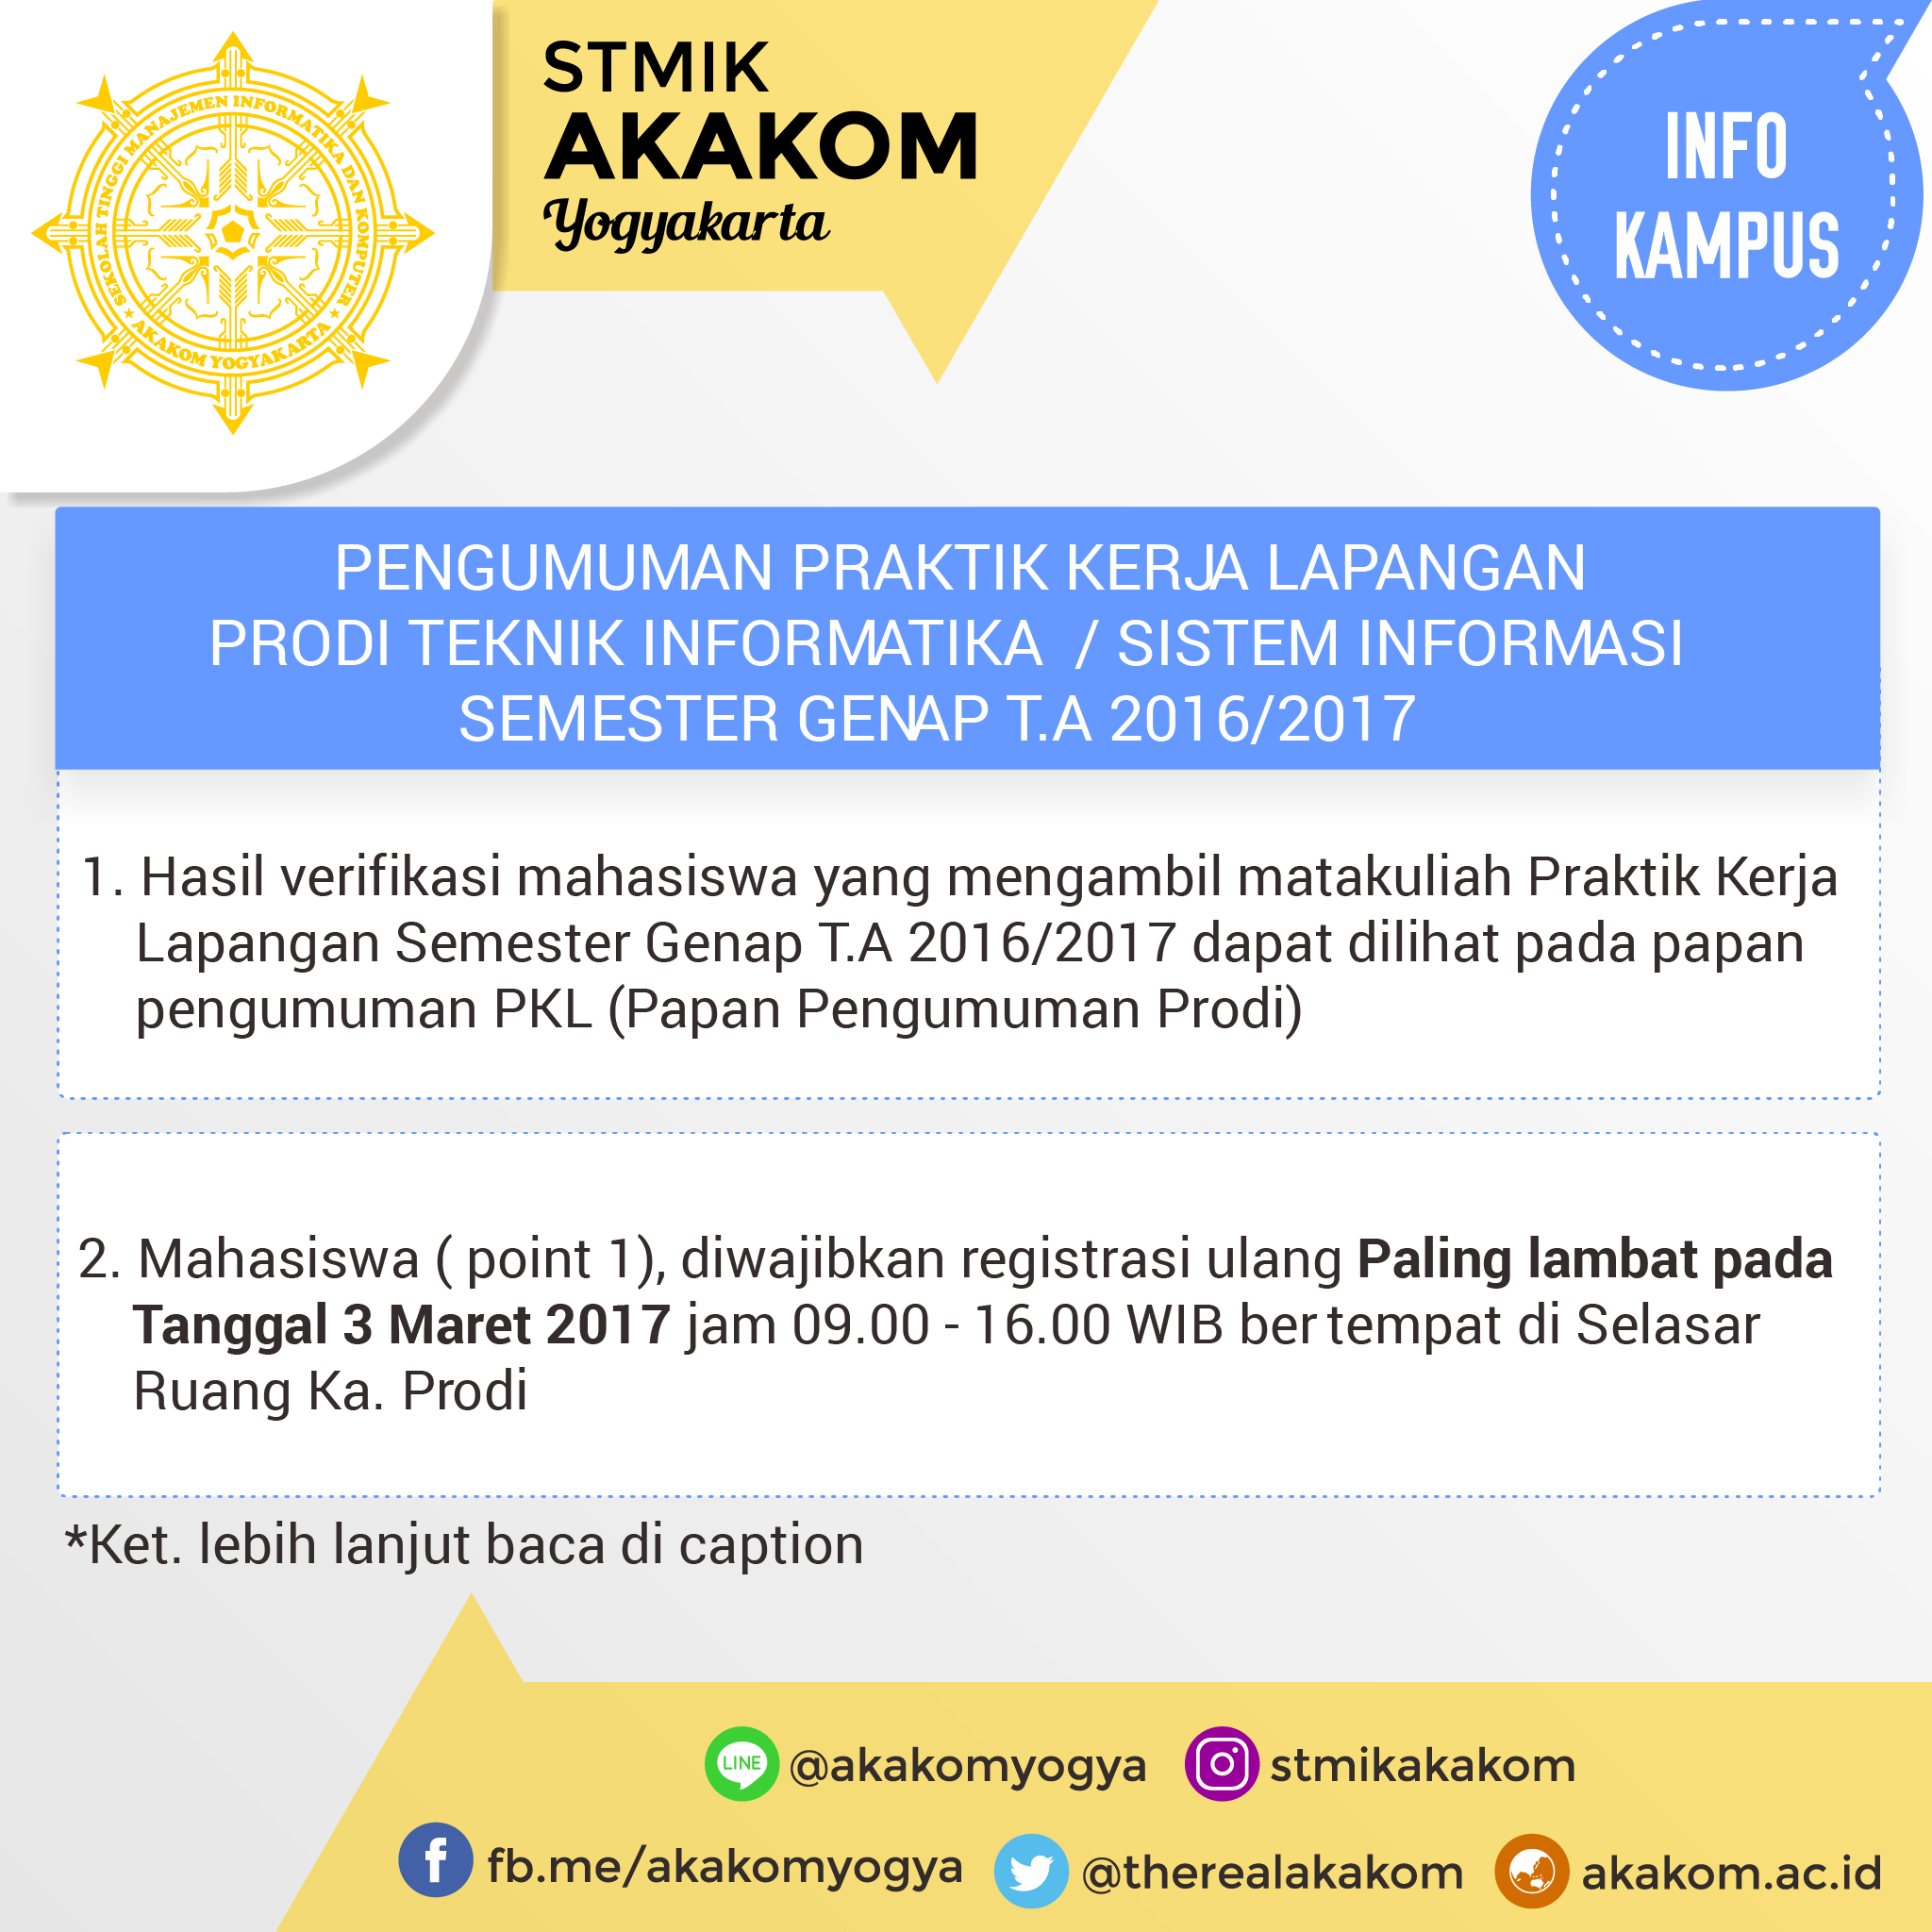 PENGUMUMAN PKL
PRODI TEKNIK INFORMATIKA & SISTEM INFORMASI
SEMESTER GENAP T.A. 2016/2017
